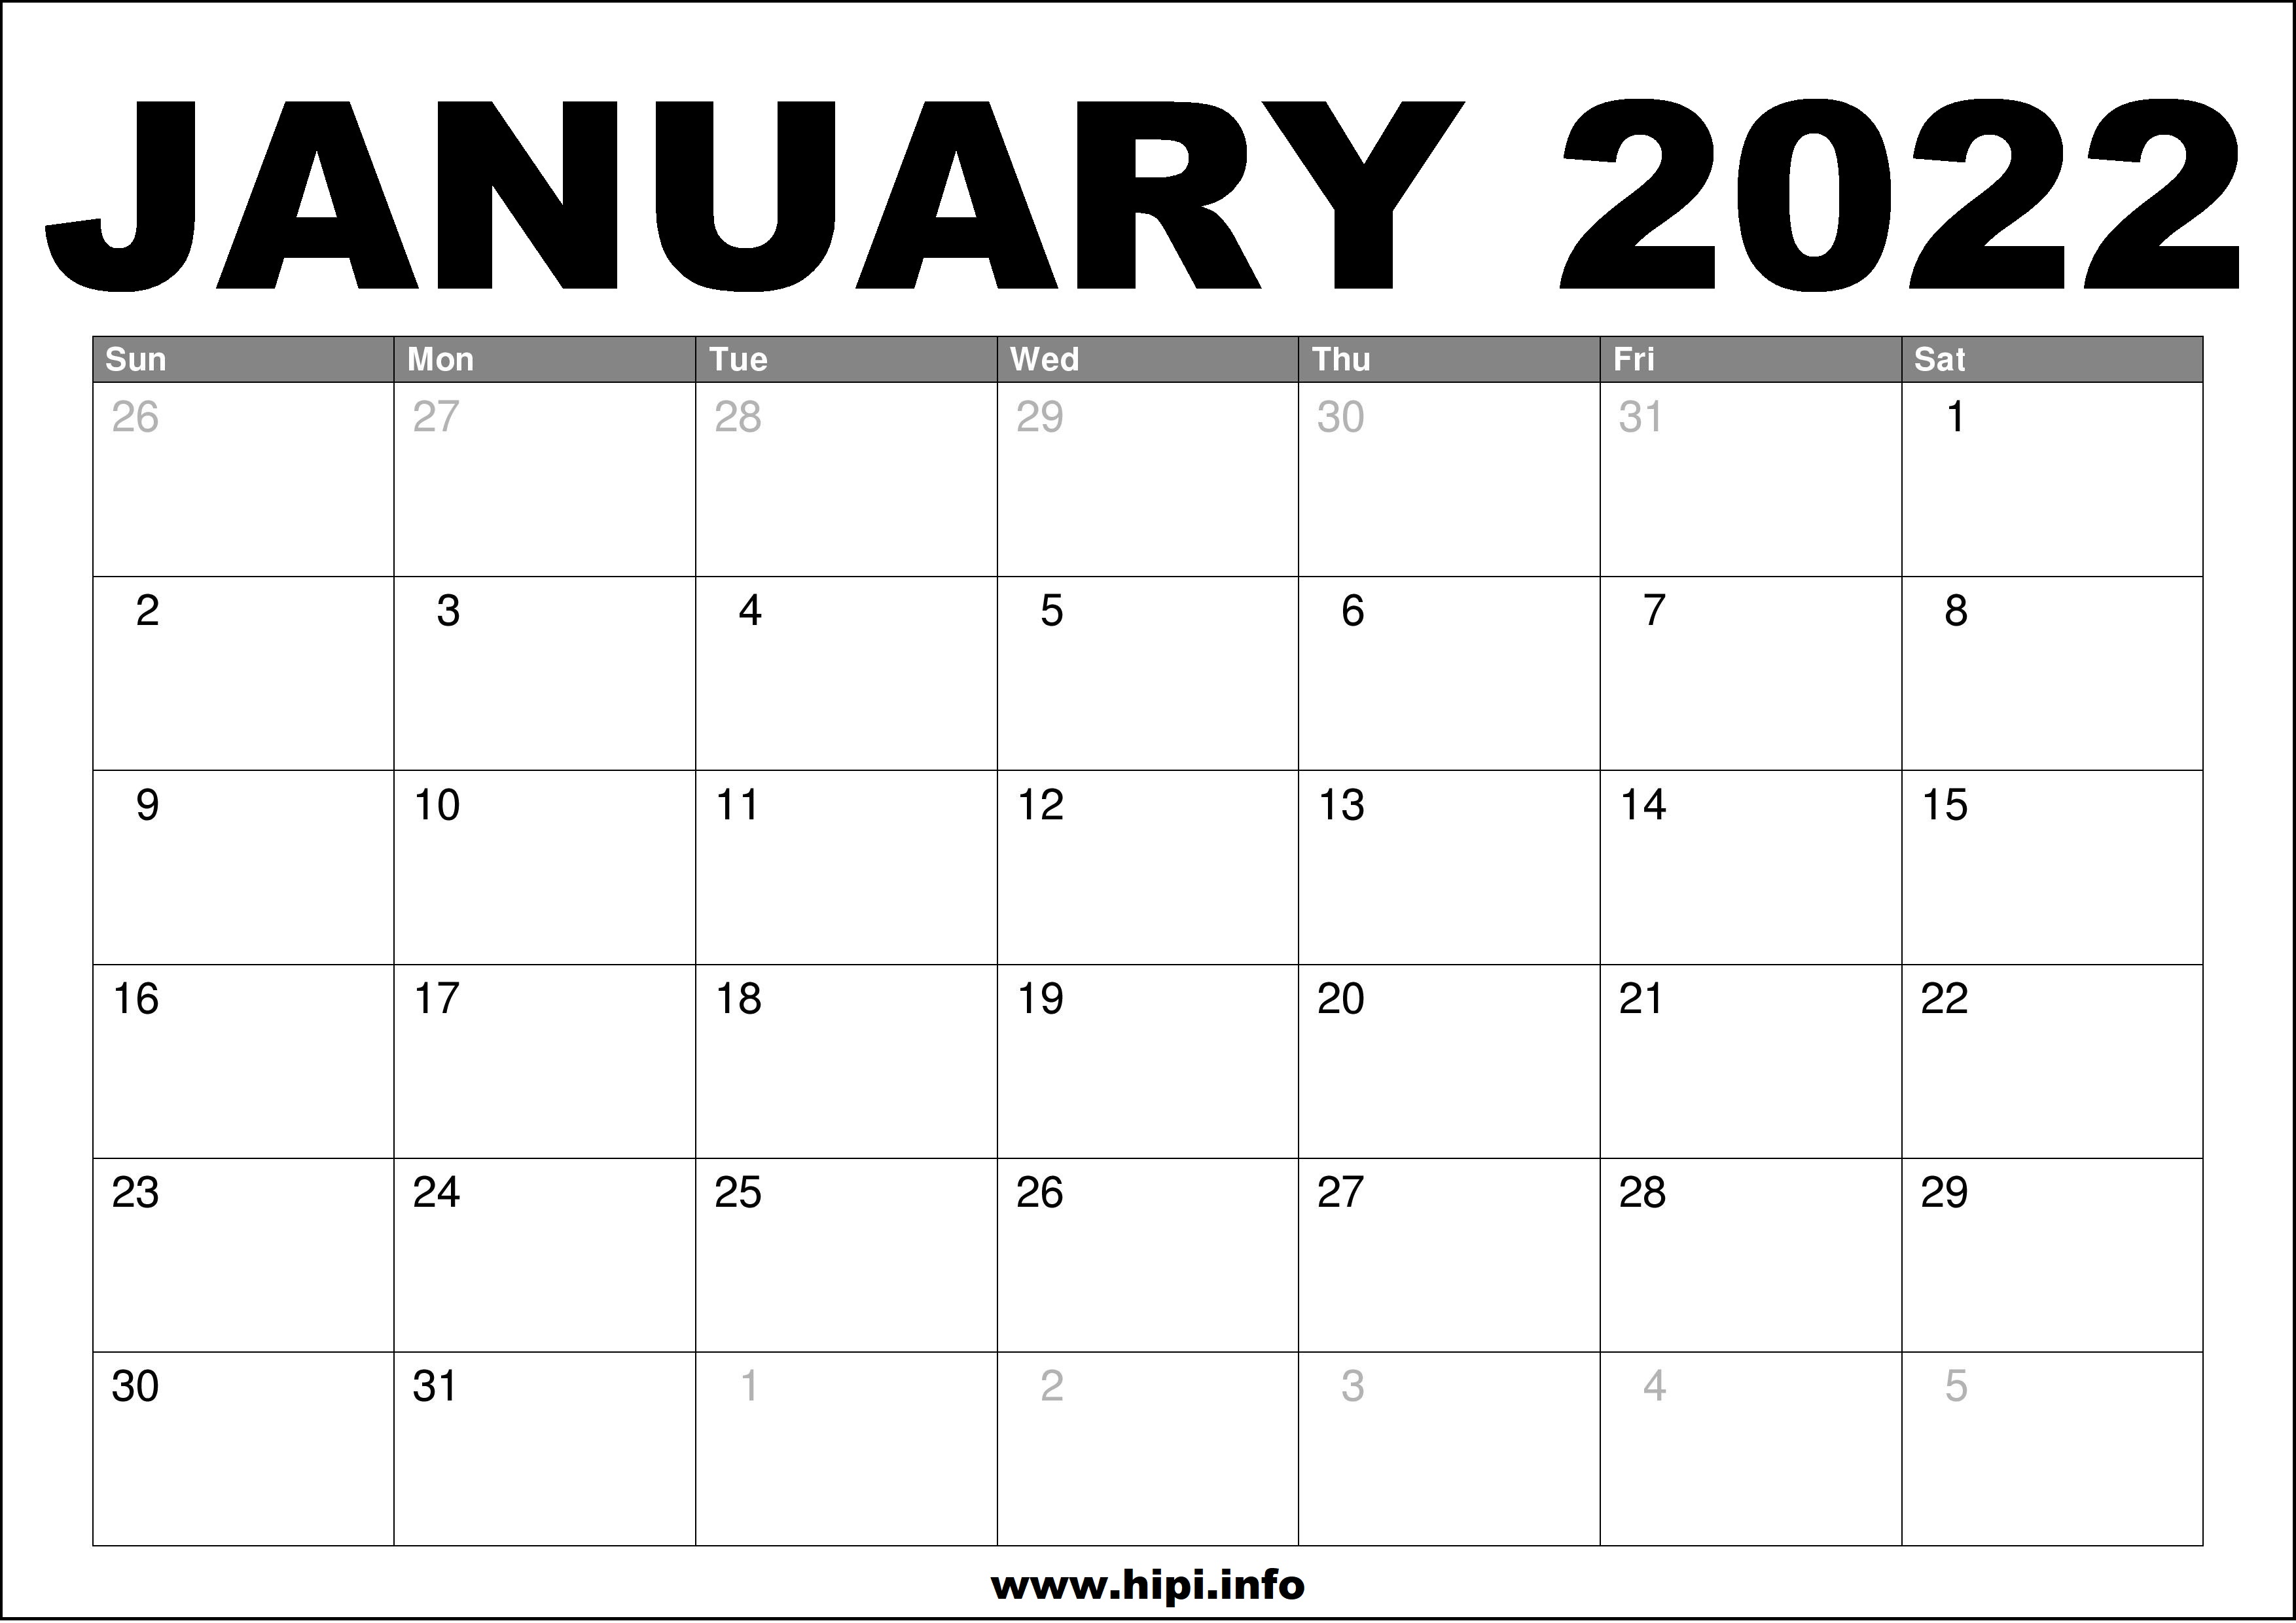 Month Of January 2022 Calendar January 2022 Calendar Printable Free - Hipi.info | Calendars Printable Free